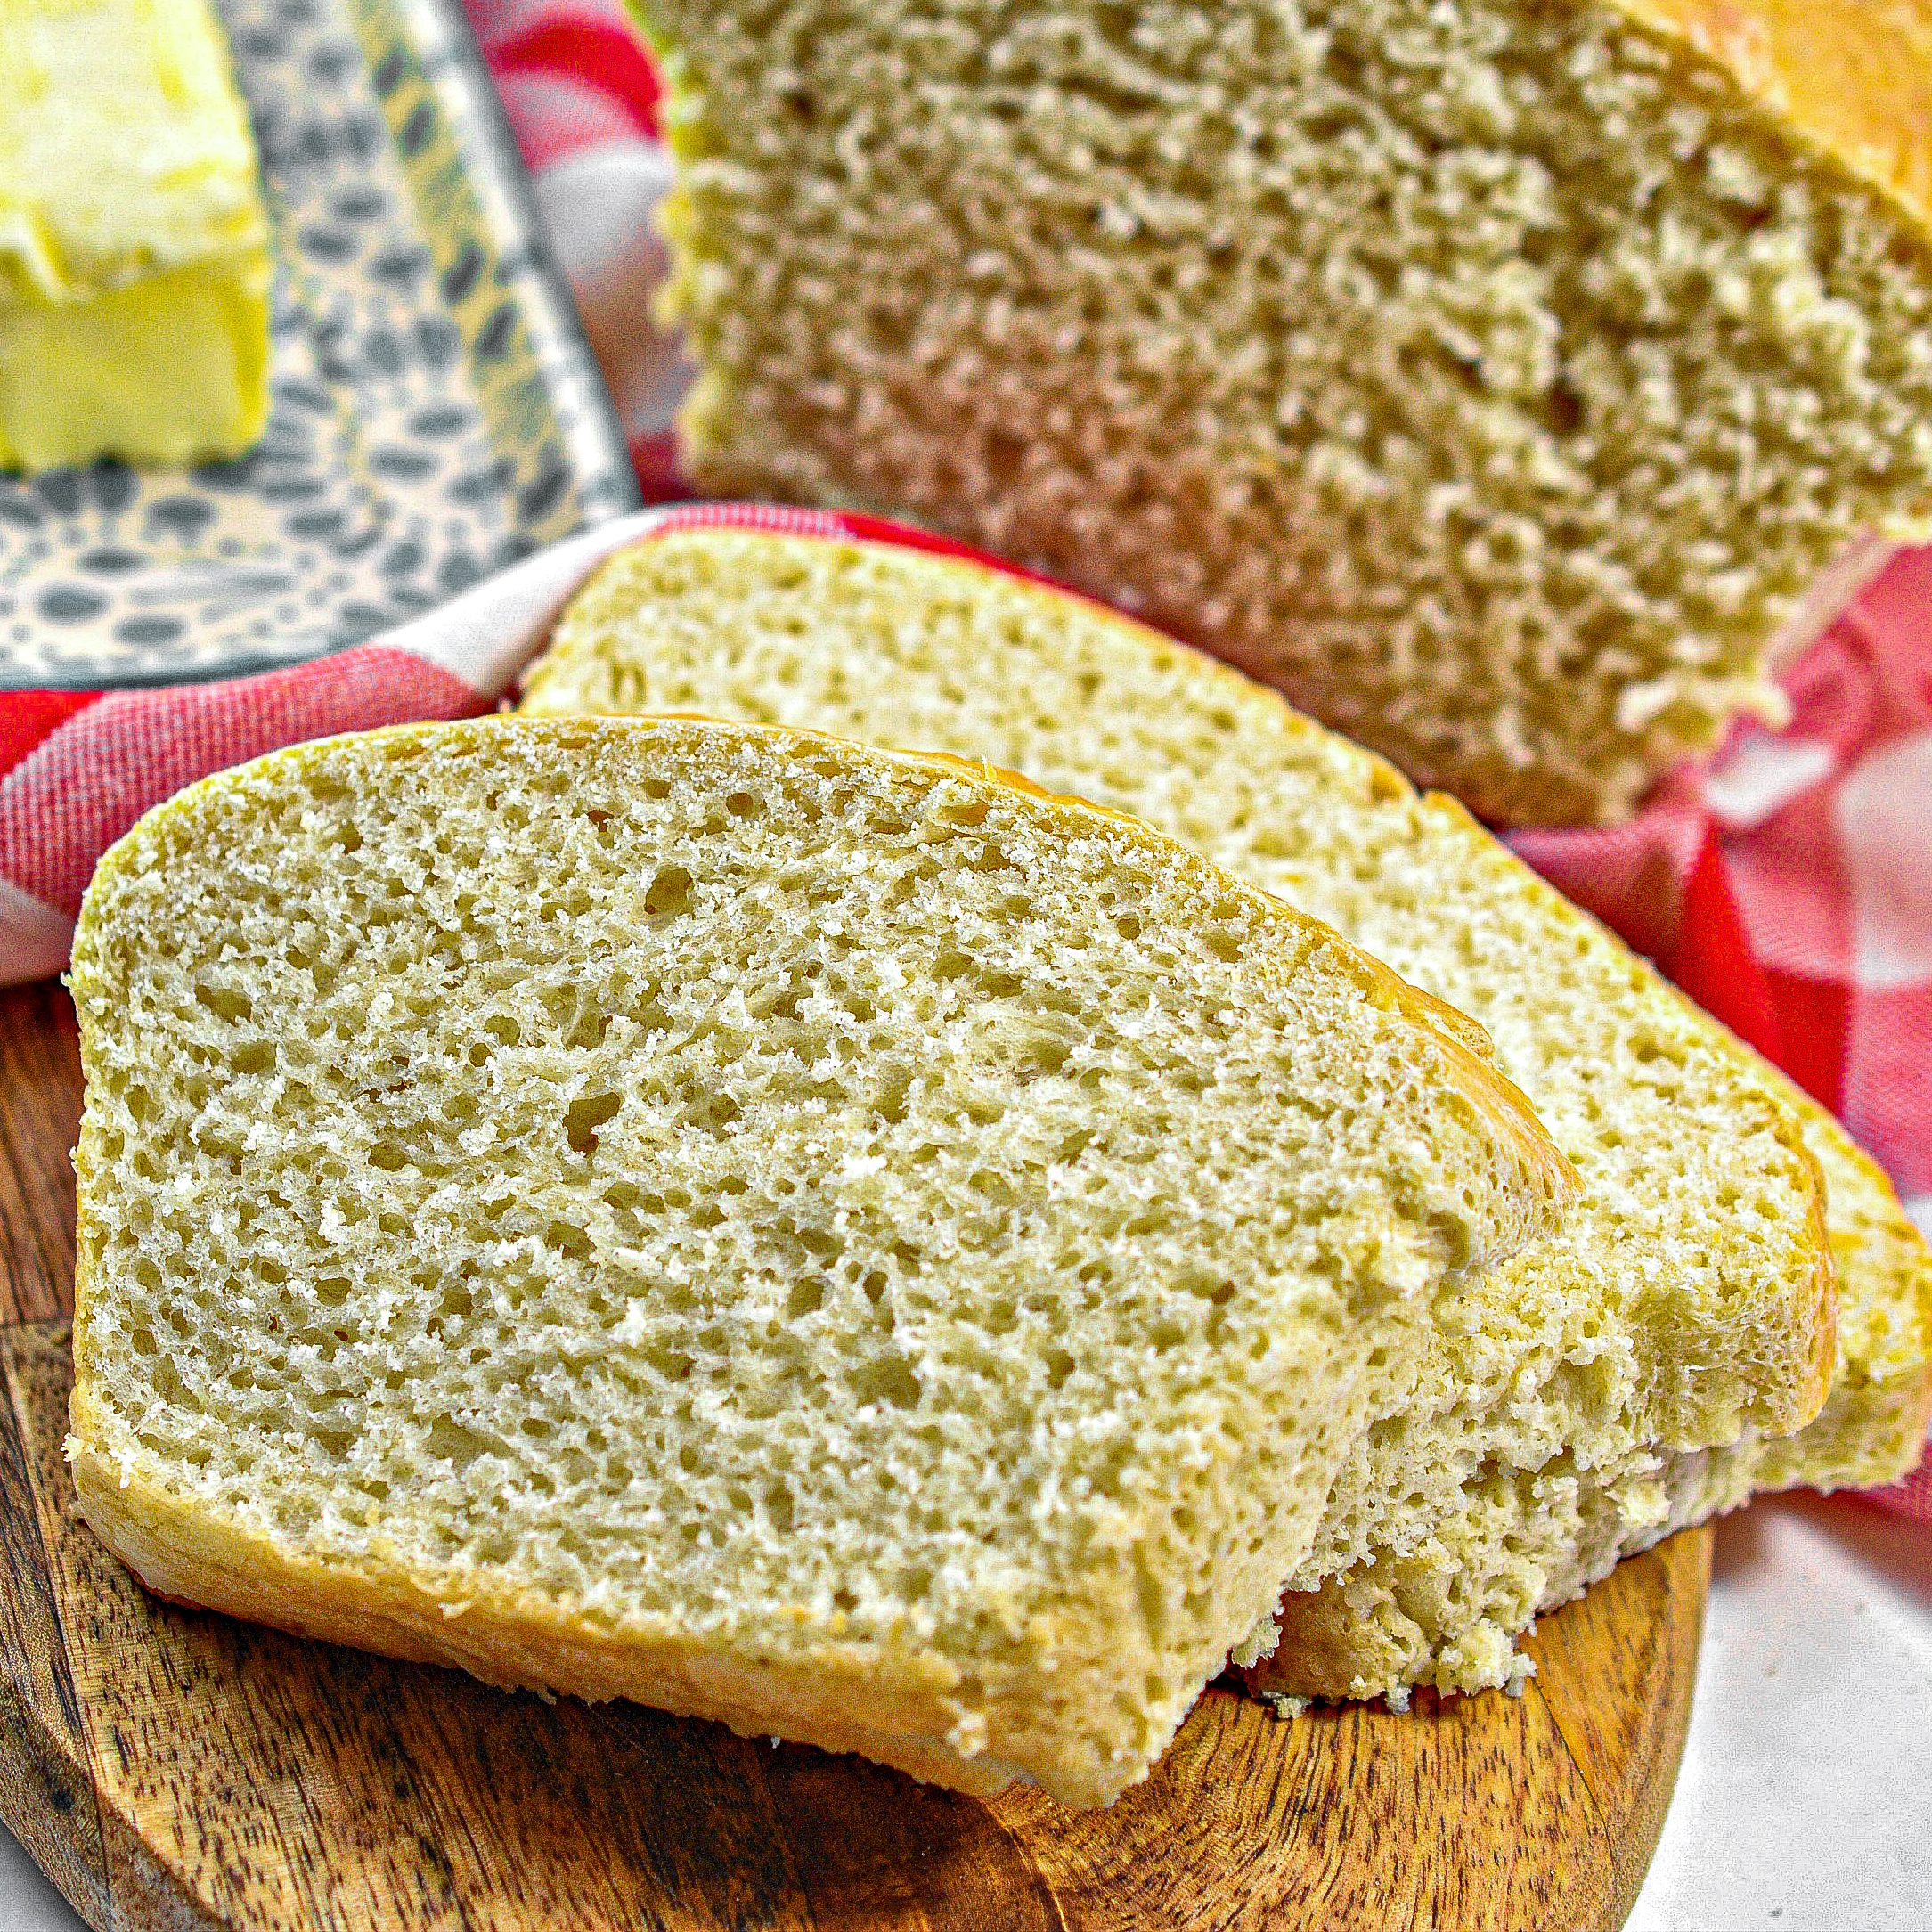 Grandma’s Country White Bread, country white bread, white bread, homemade bread